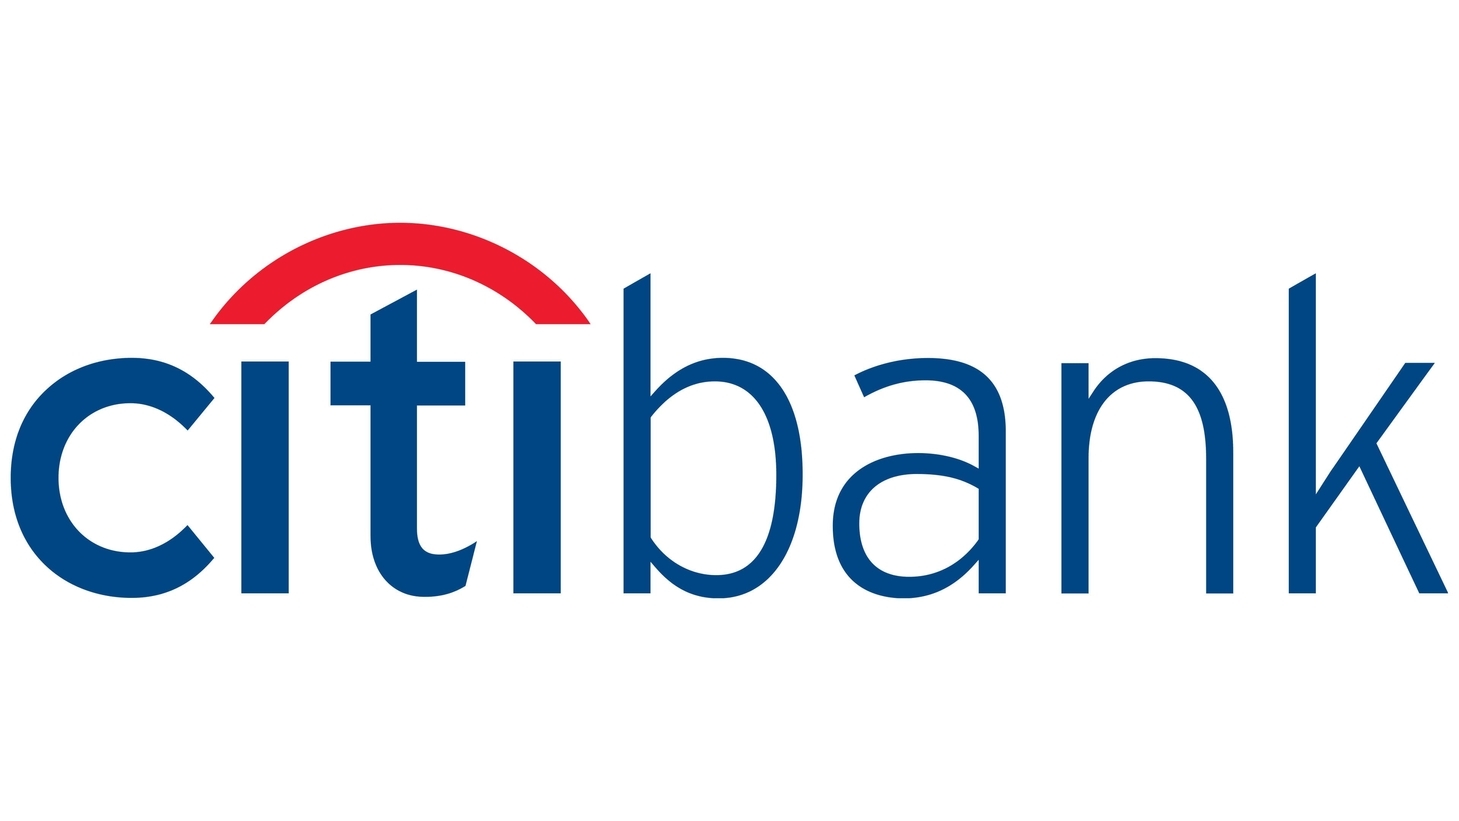 Citibank sign